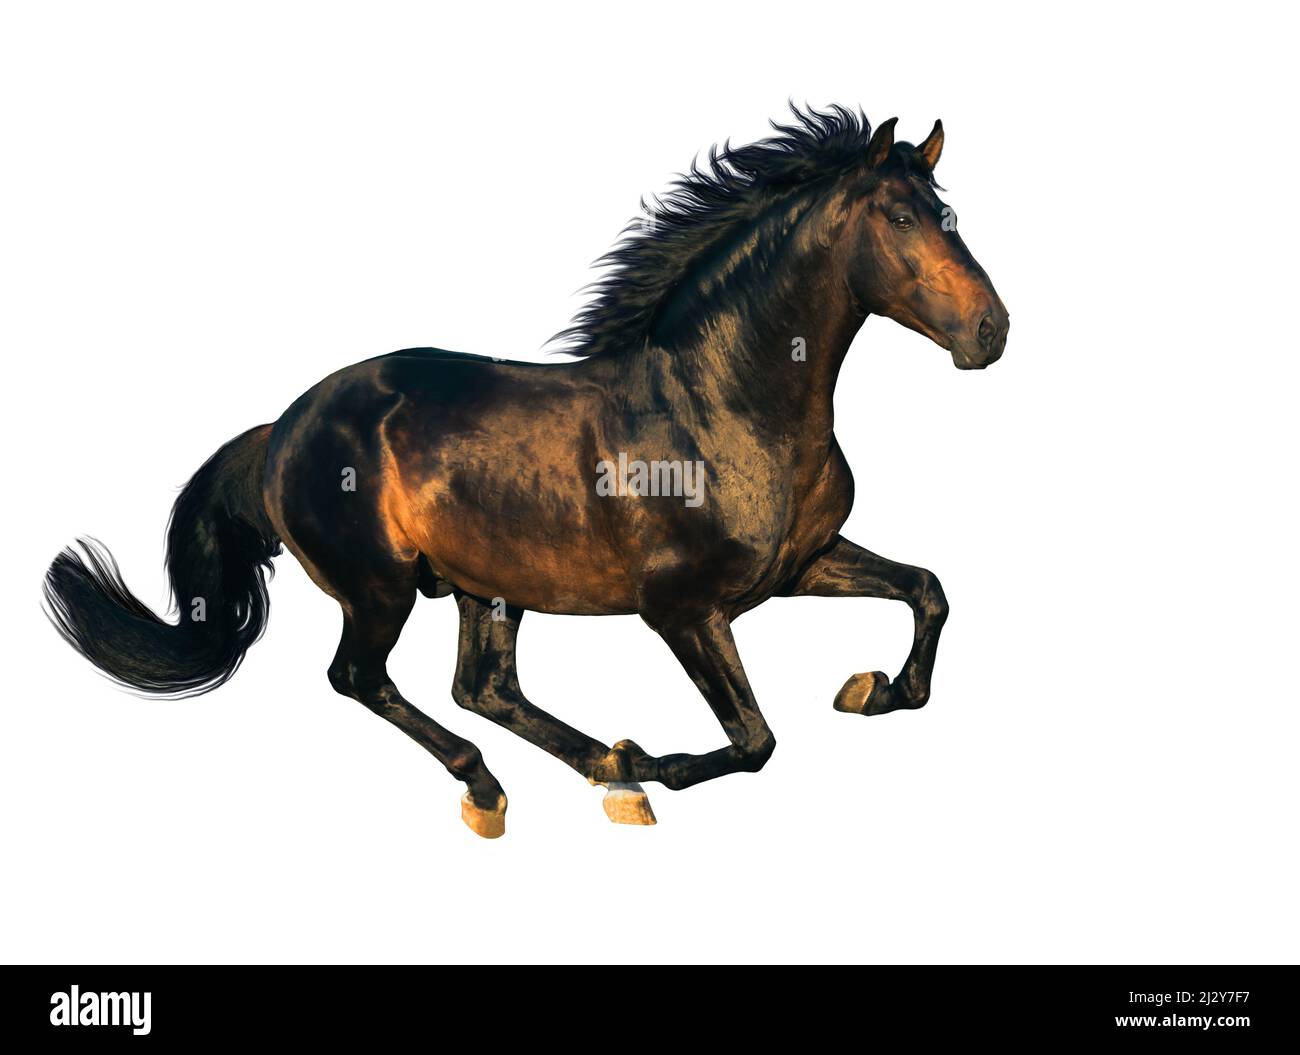 The black horse run isolated on white background Stock Photo